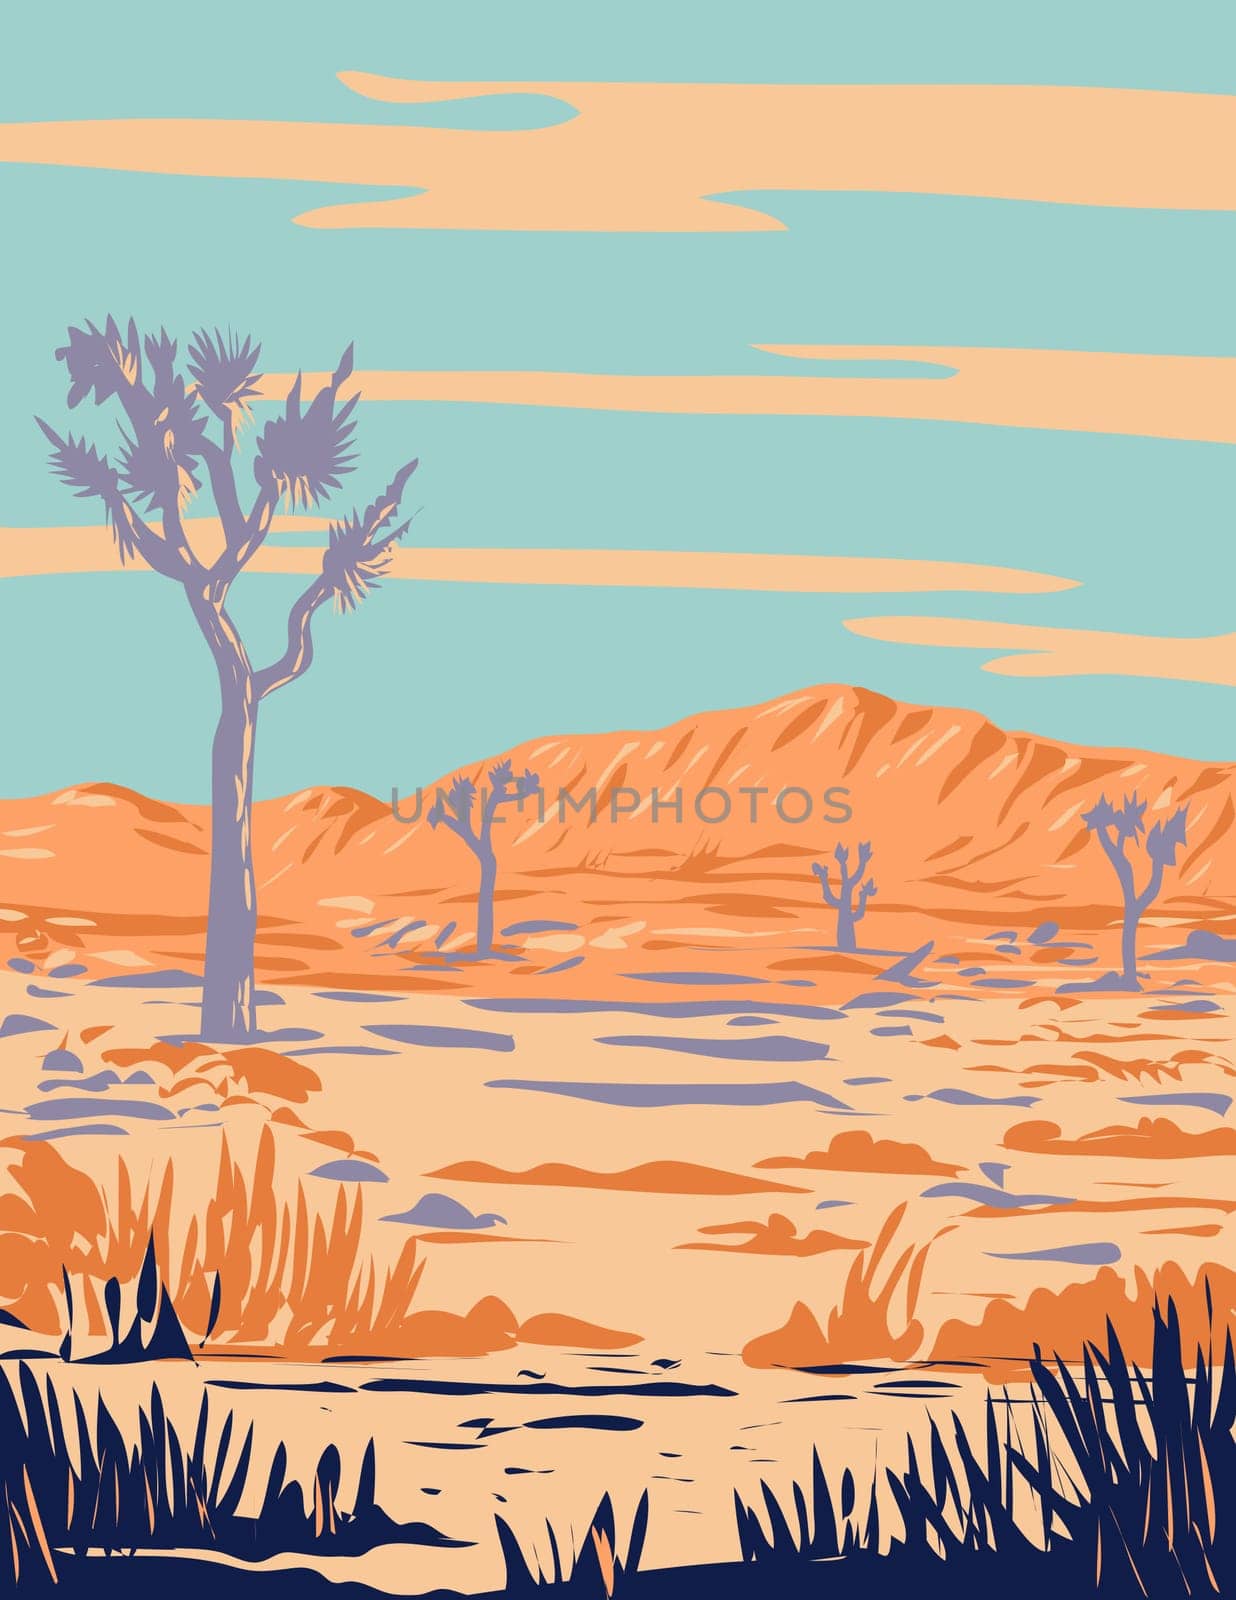 Joshua Tree National Park in Mojave Desert California During Summer WPA Poster Art by patrimonio